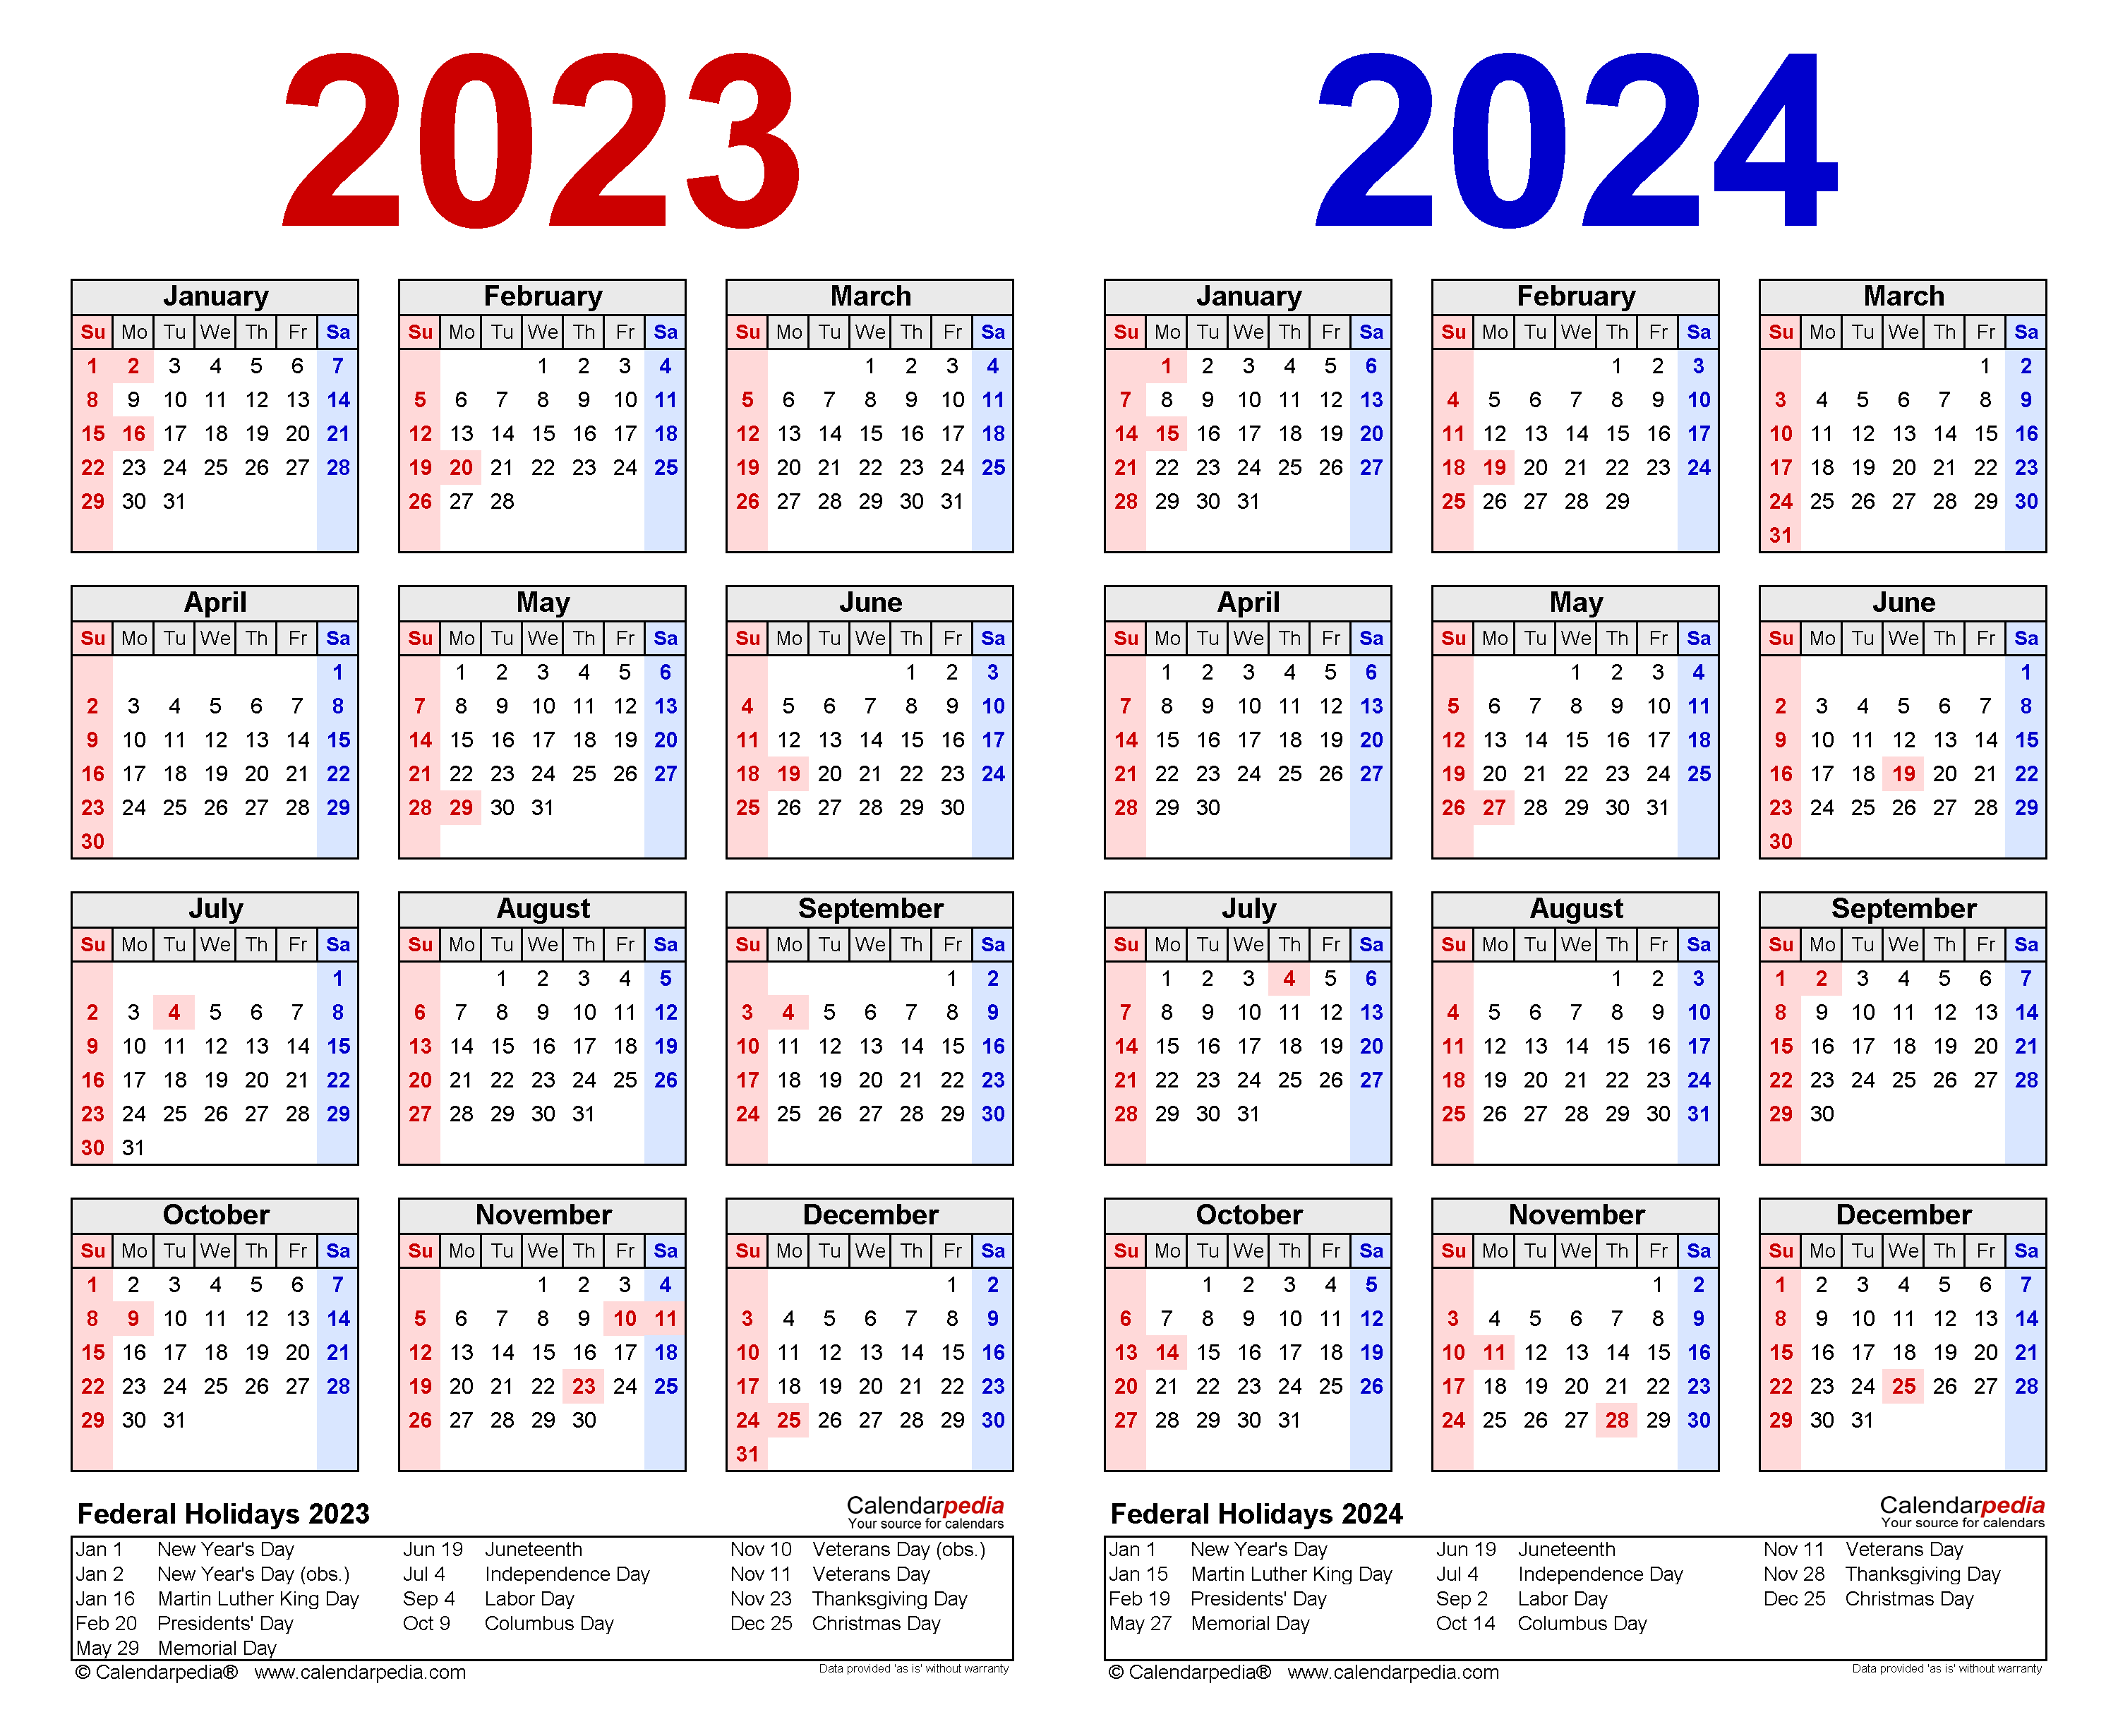 neisd-calendar-2023-2023-calendar